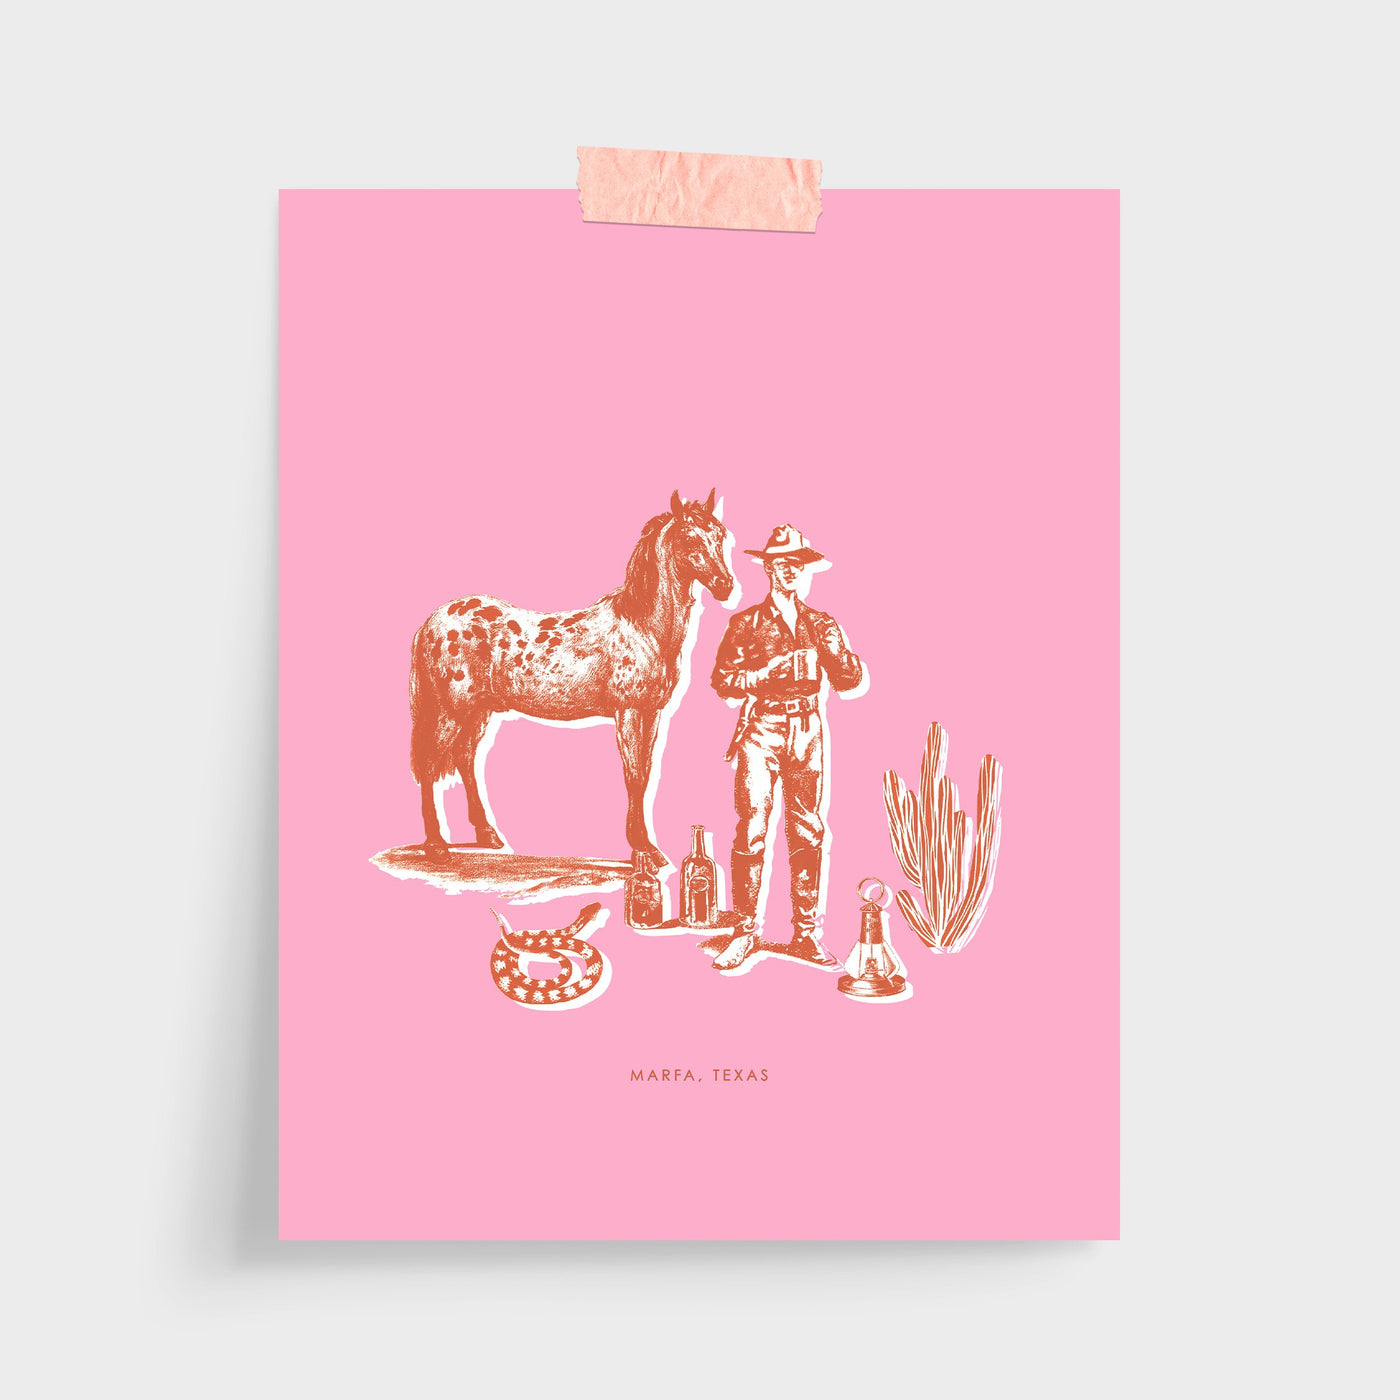 Marfa Cowboy Print Gallery Print Pink / 5x7 / Unframed Katie Kime